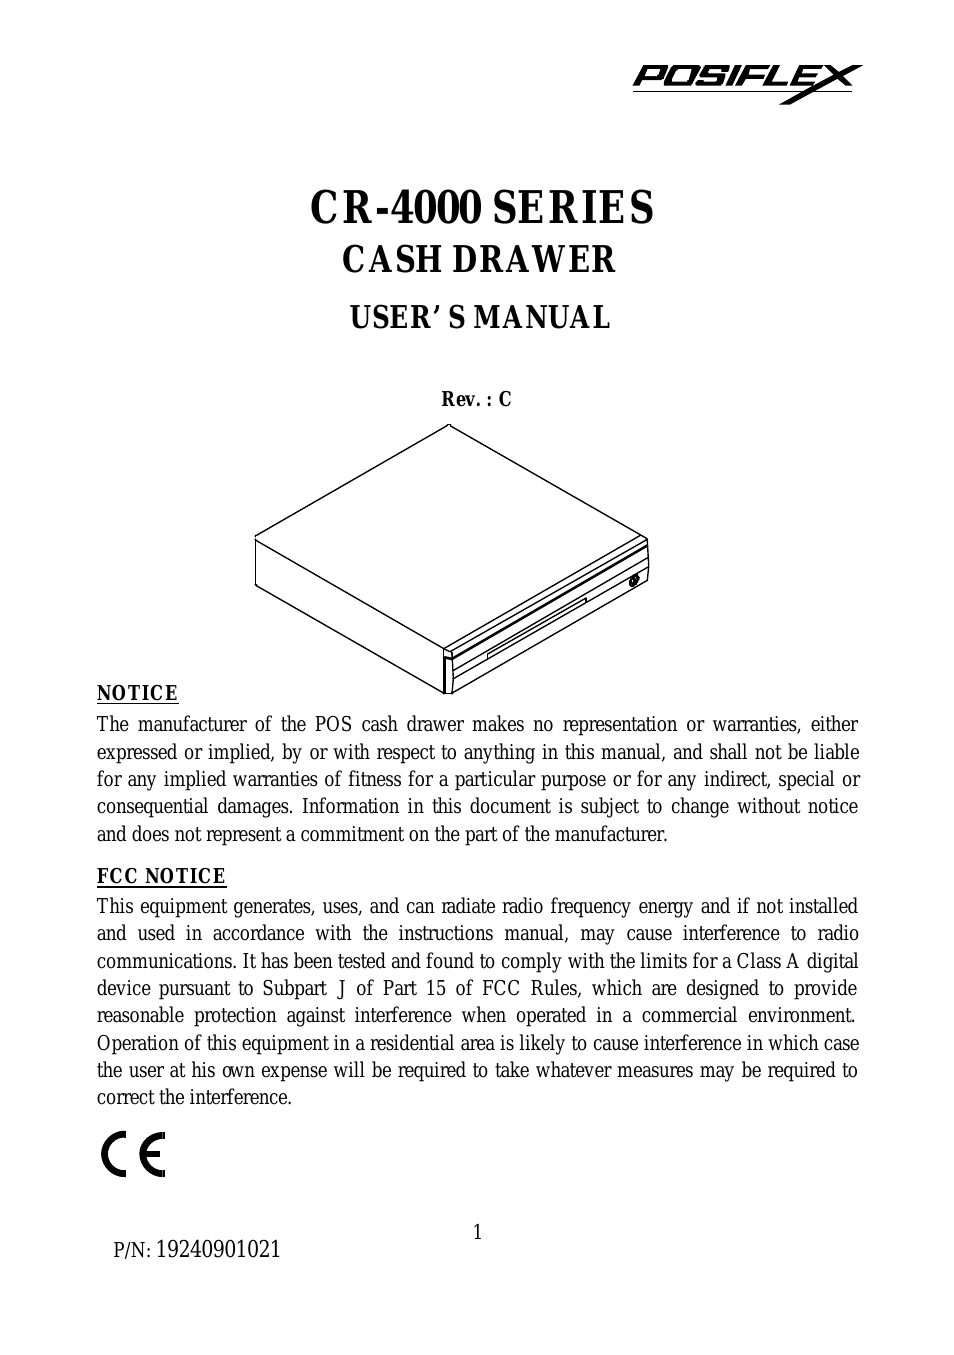 Cash Drawer CR421X